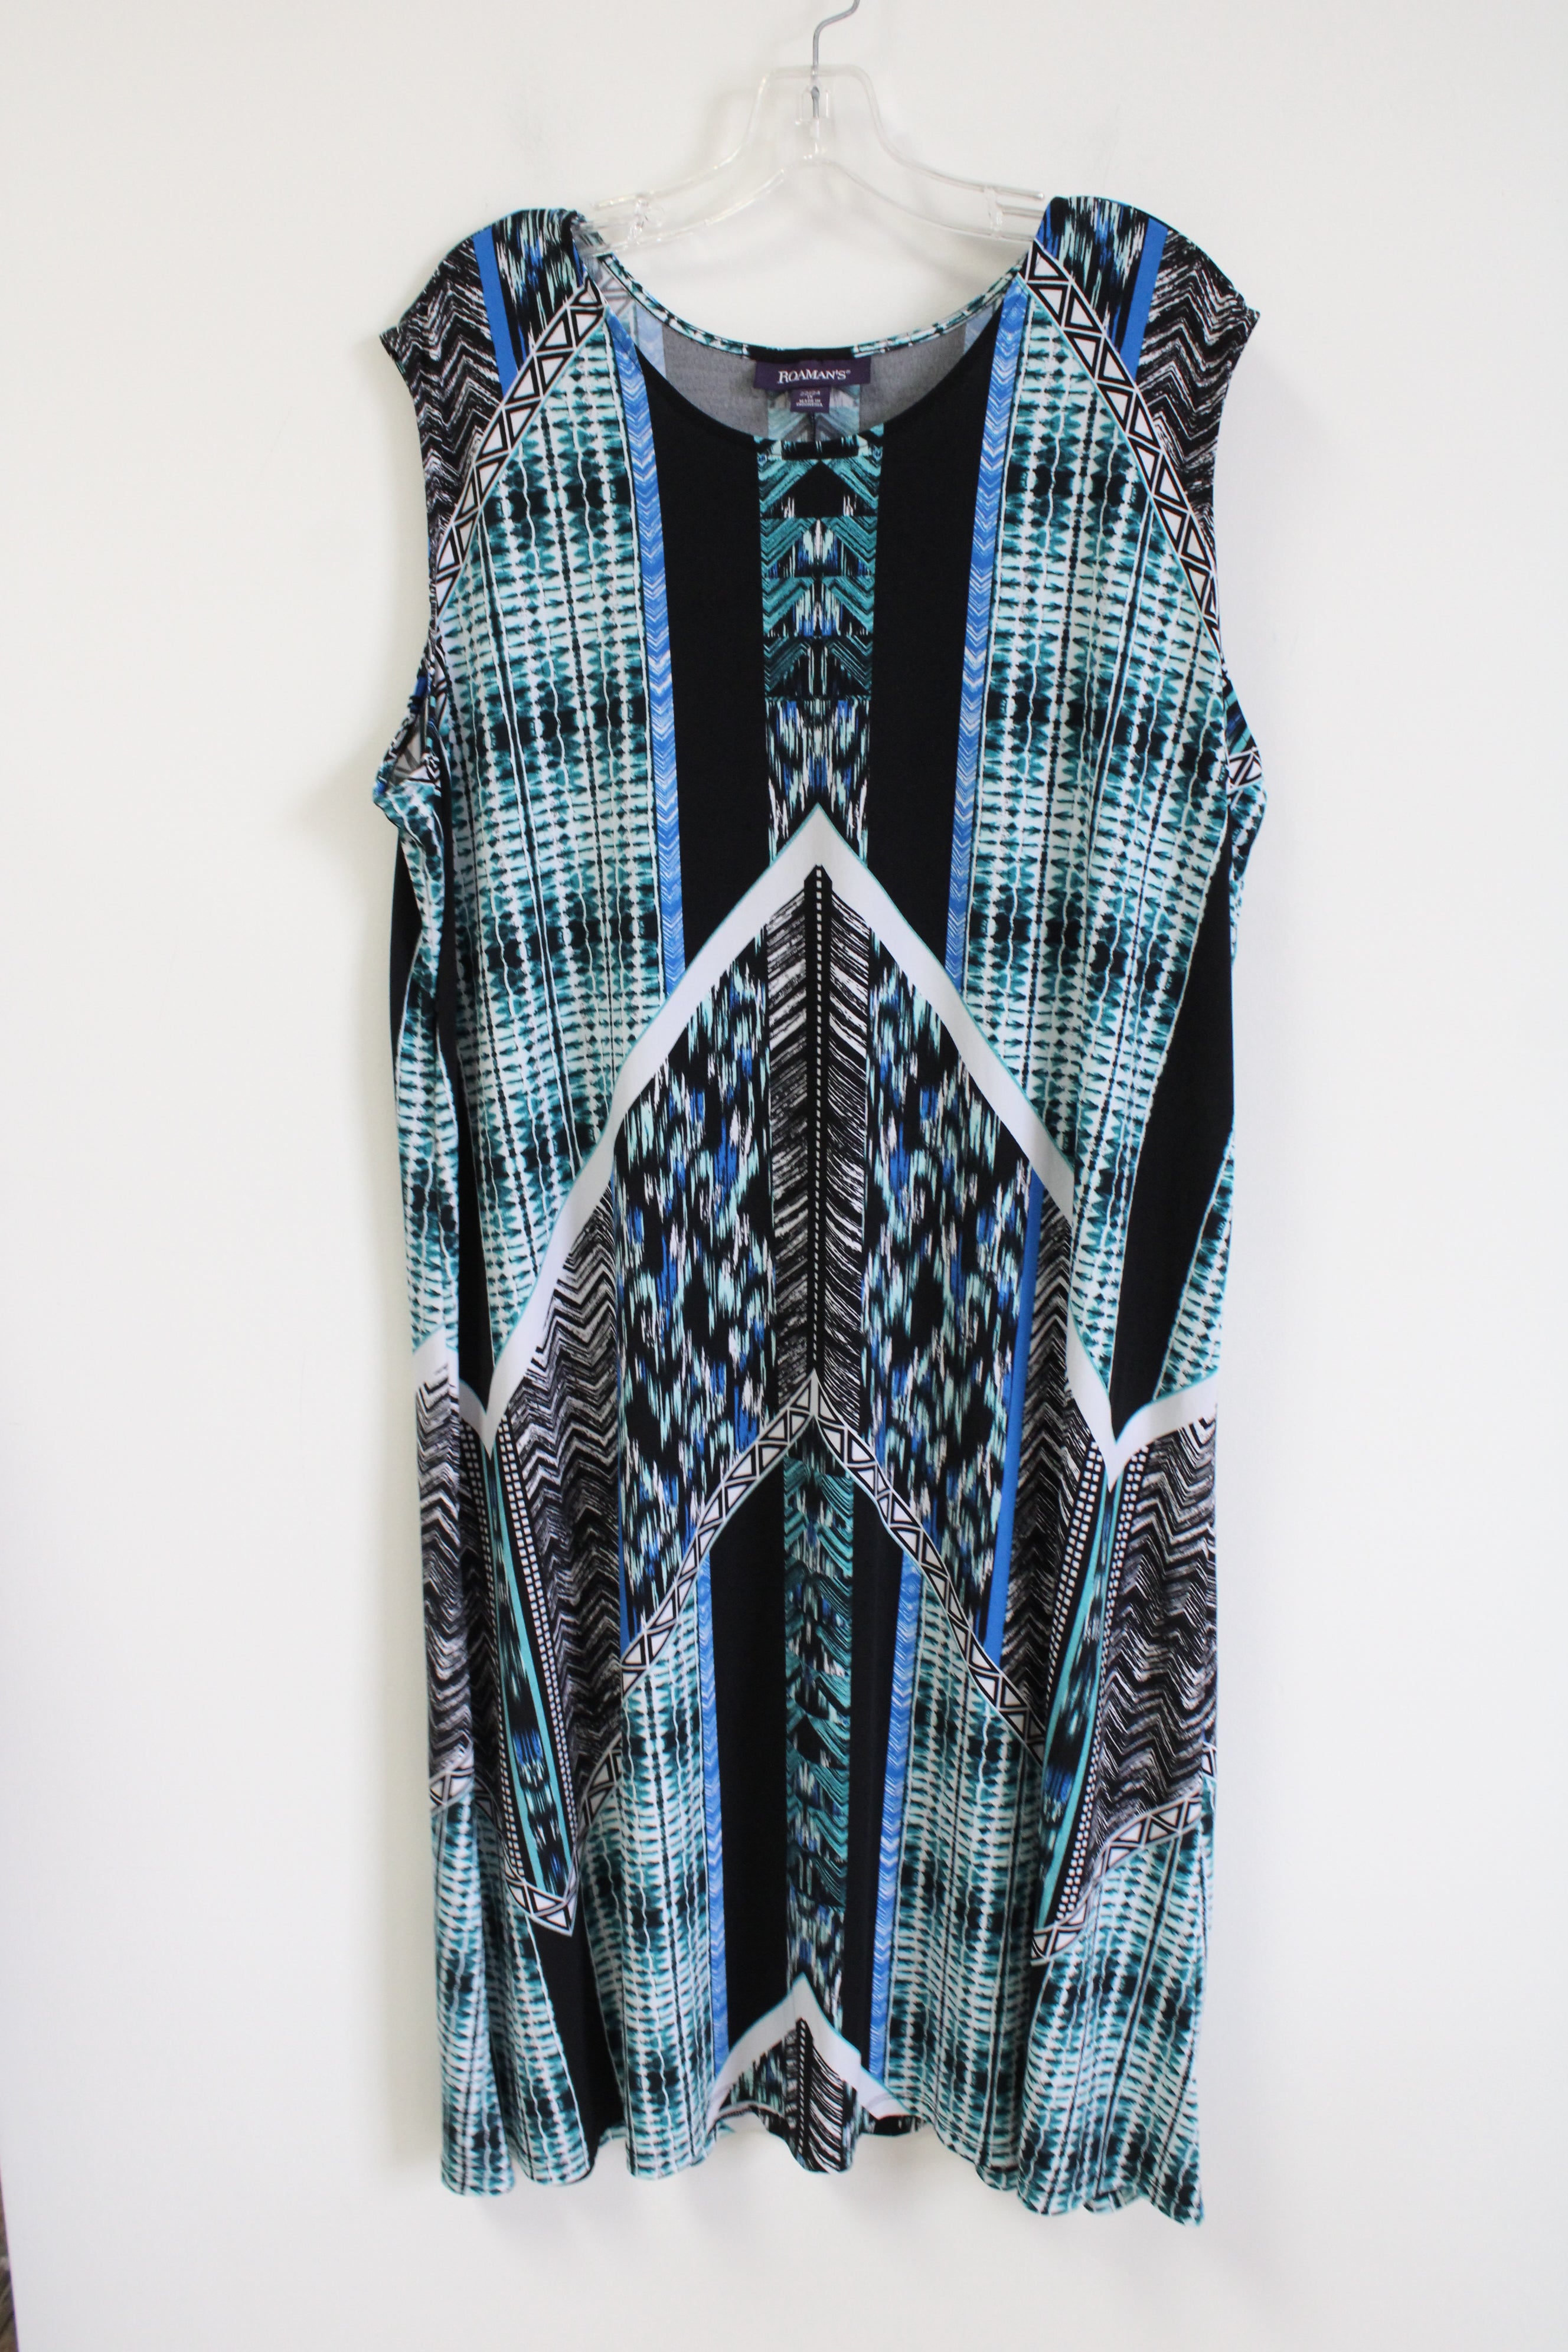 Roaman's Black Blue Patterned Dress | 22/24 (1X)